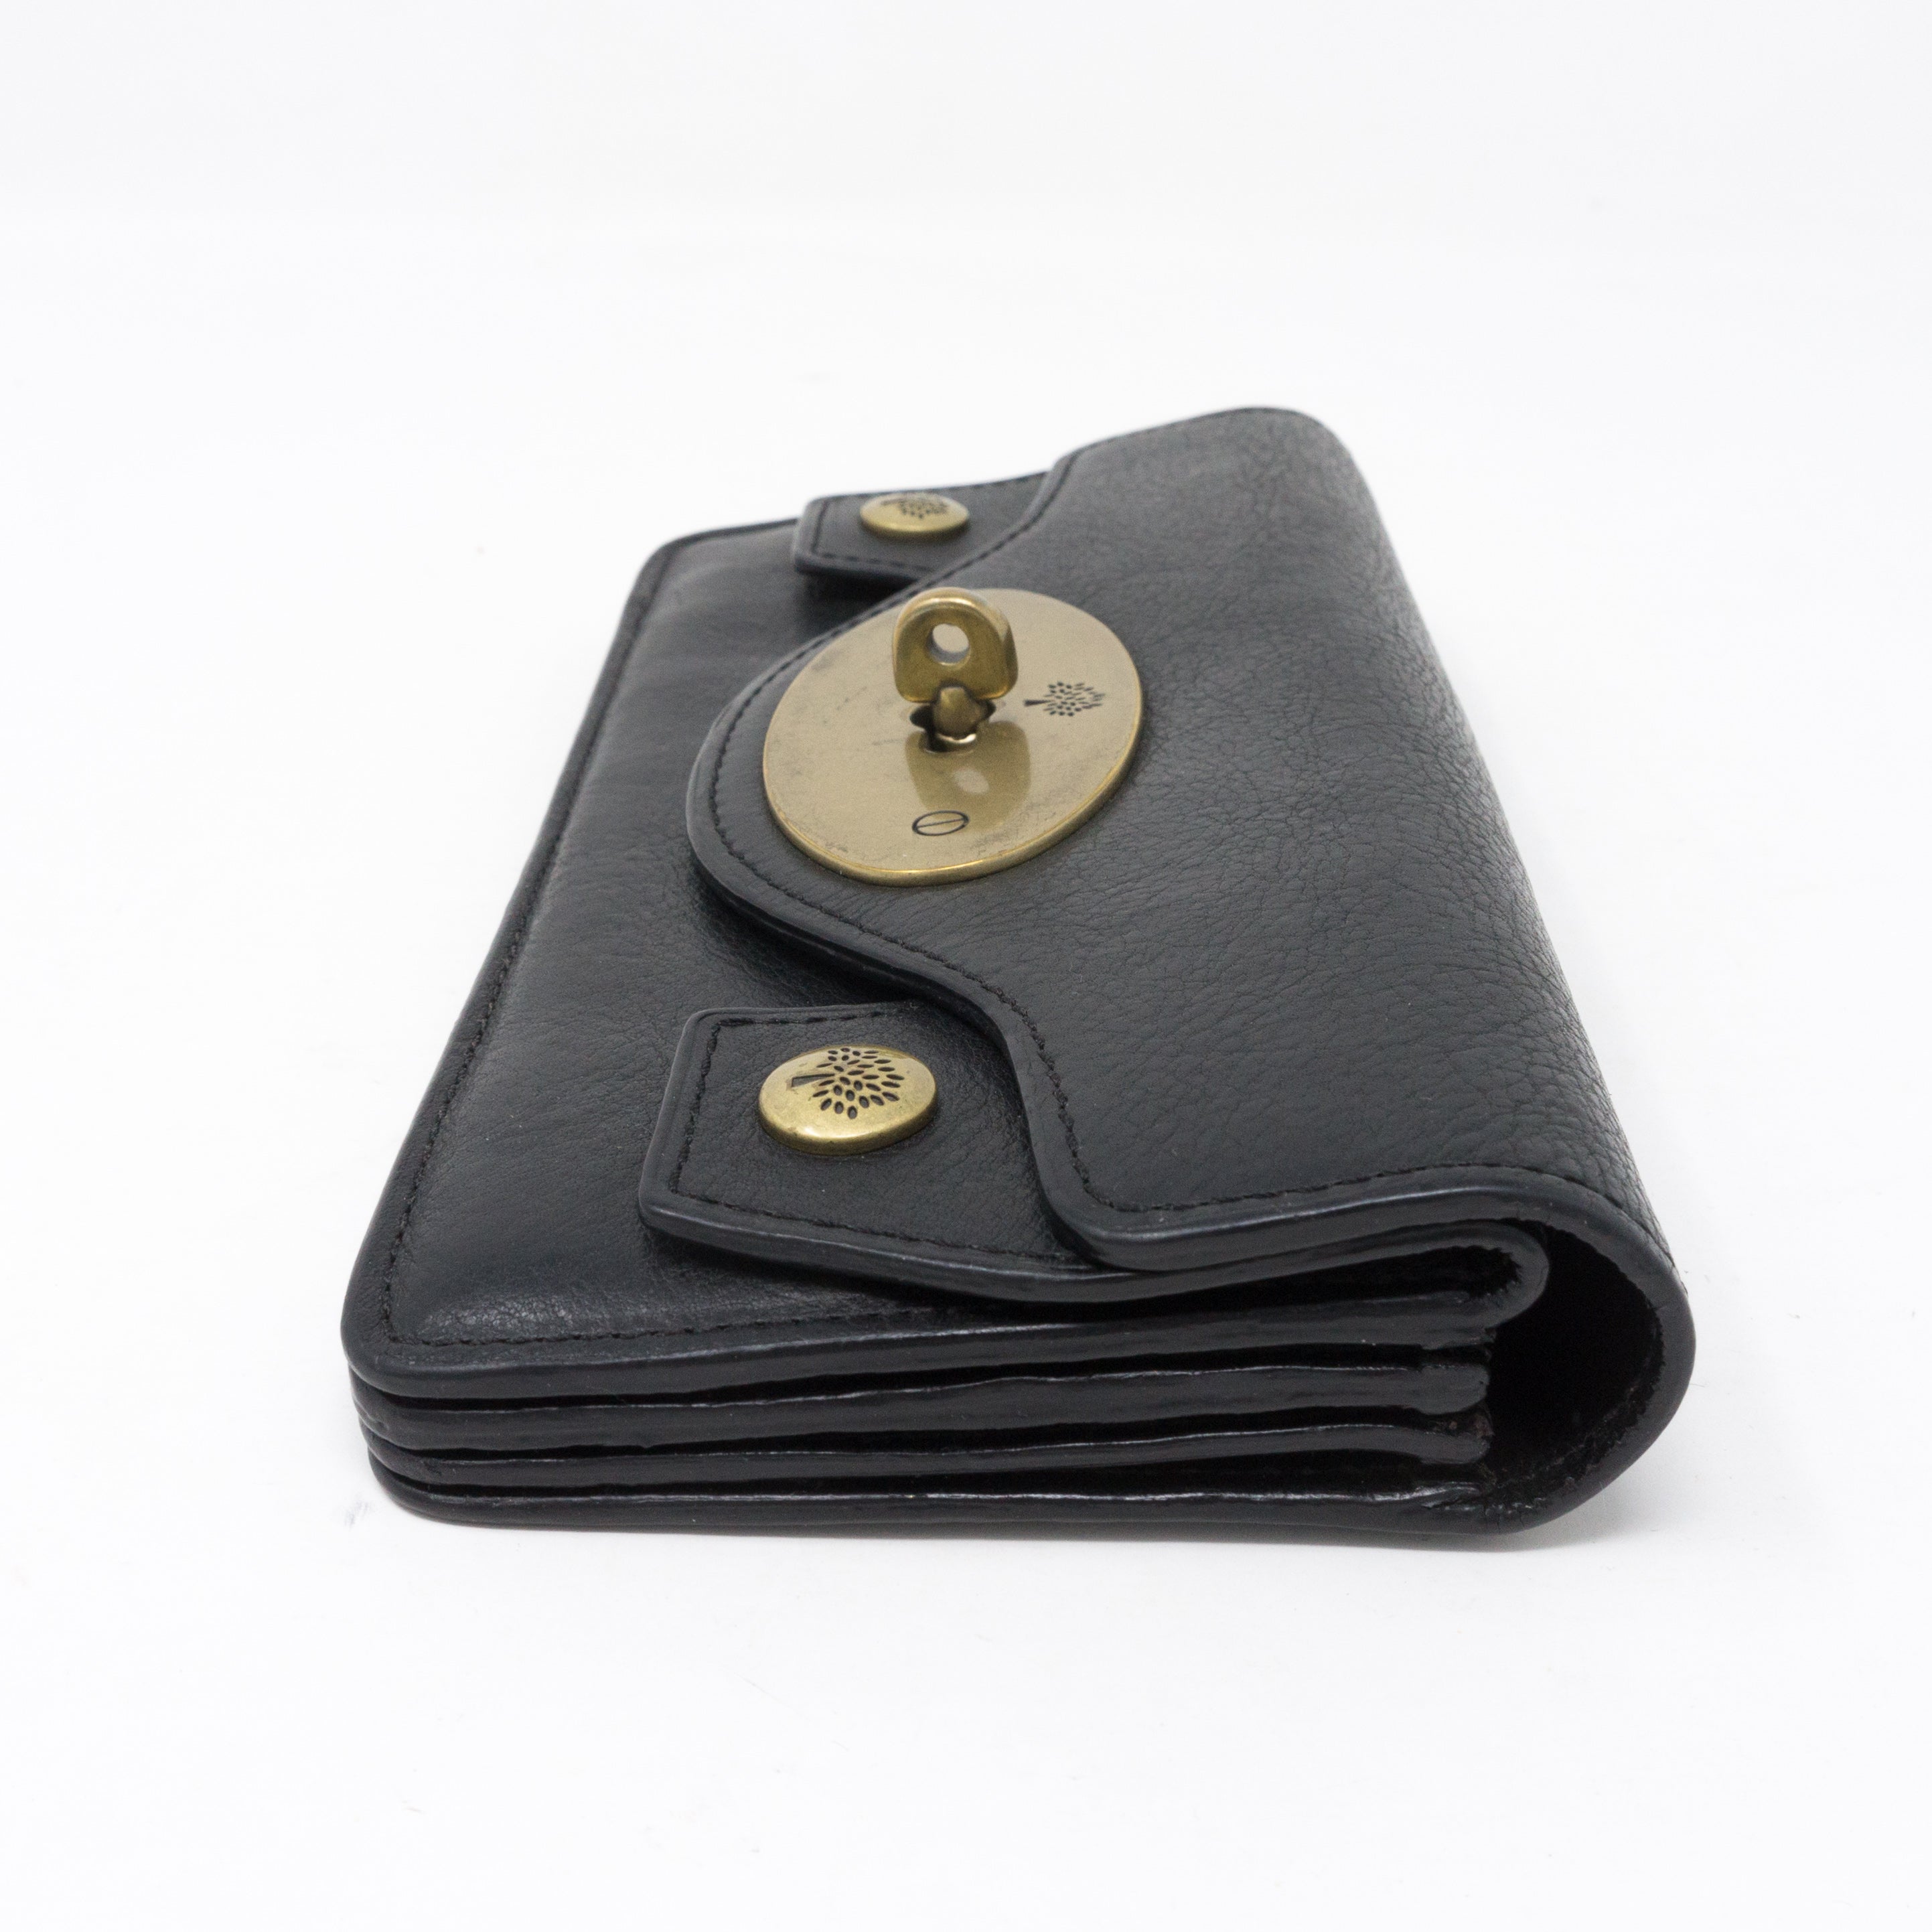 GENUINE MULBERRY BAYSWATER Purse - Oak Brown Leather - Similar Darley £425  £175.00 - PicClick UK